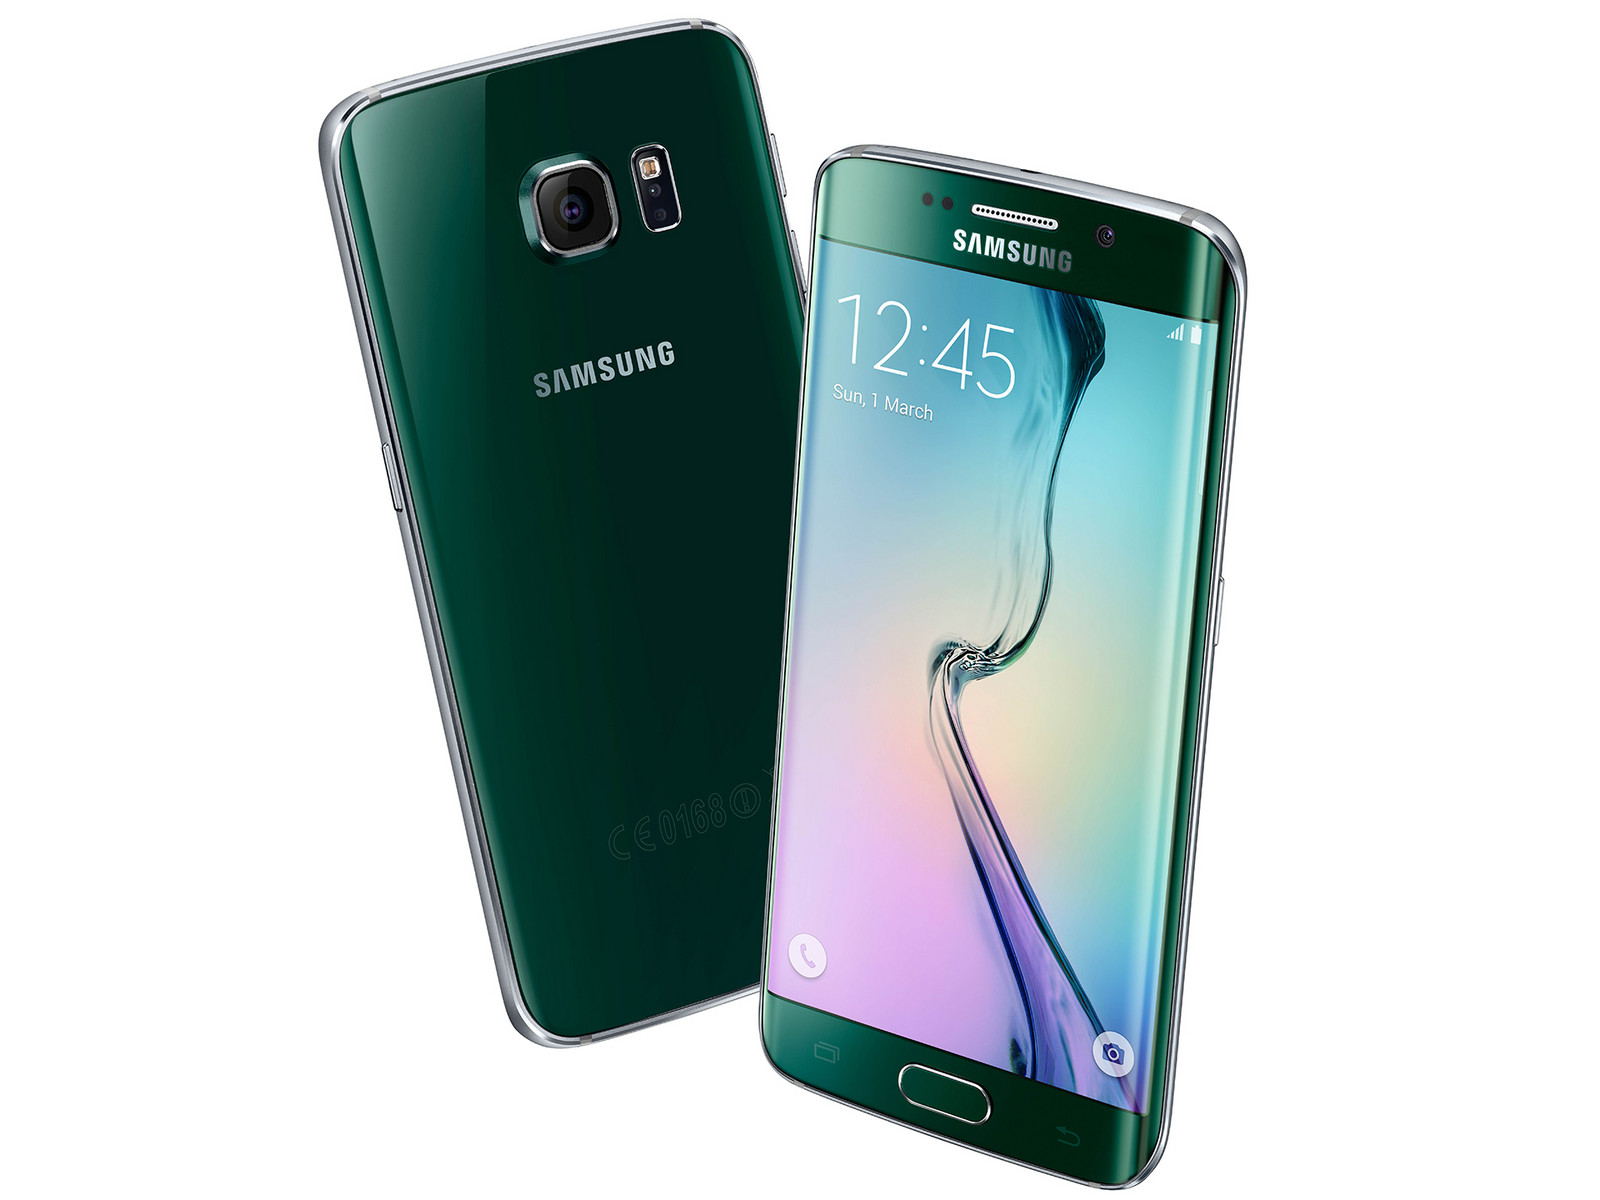 lezer kabel verdrievoudigen Samsung Galaxy S6 Edge - Notebookcheck.nl